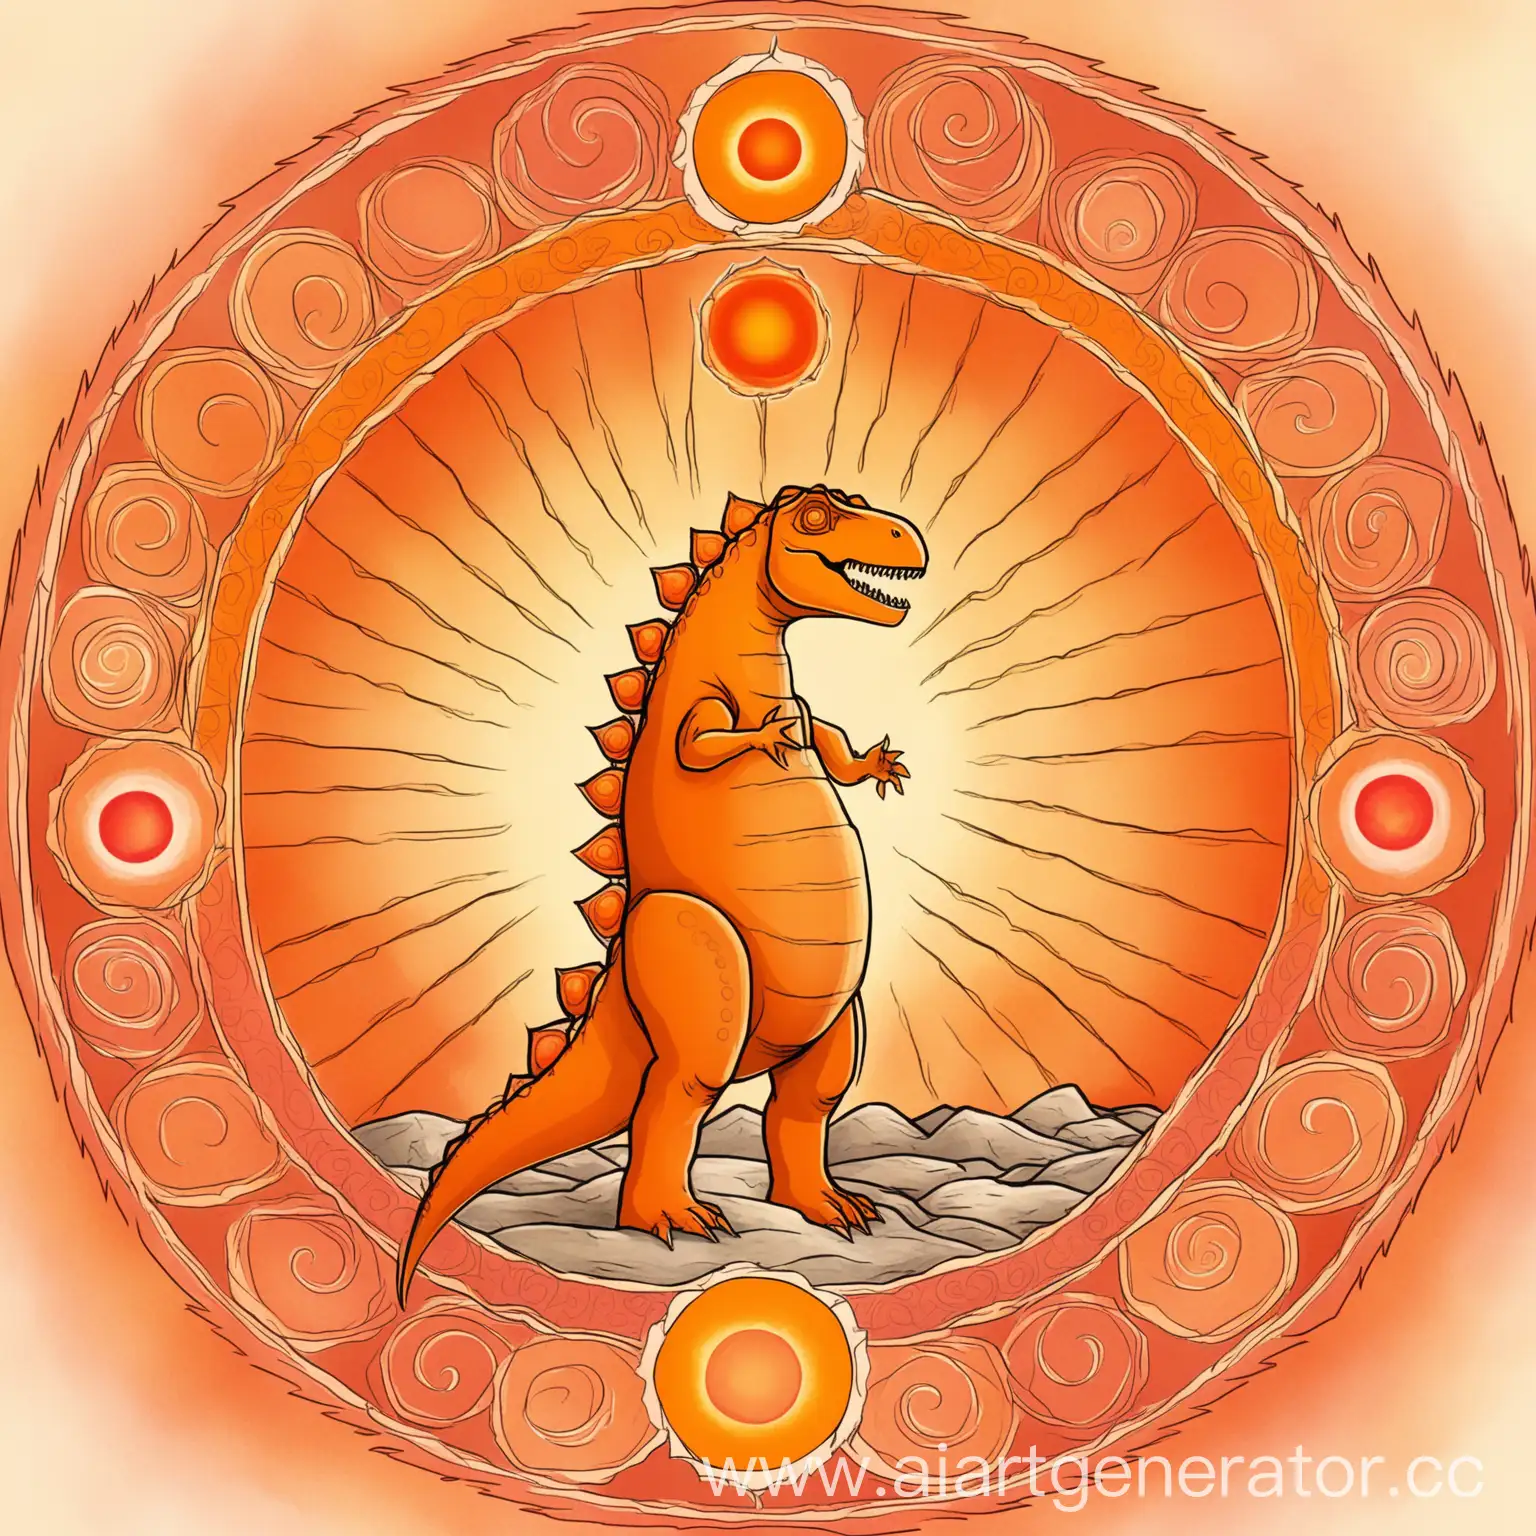 DinosaurInspired-Sacral-Chakra-Swadhisthana-Sensual-and-Creative-Energy